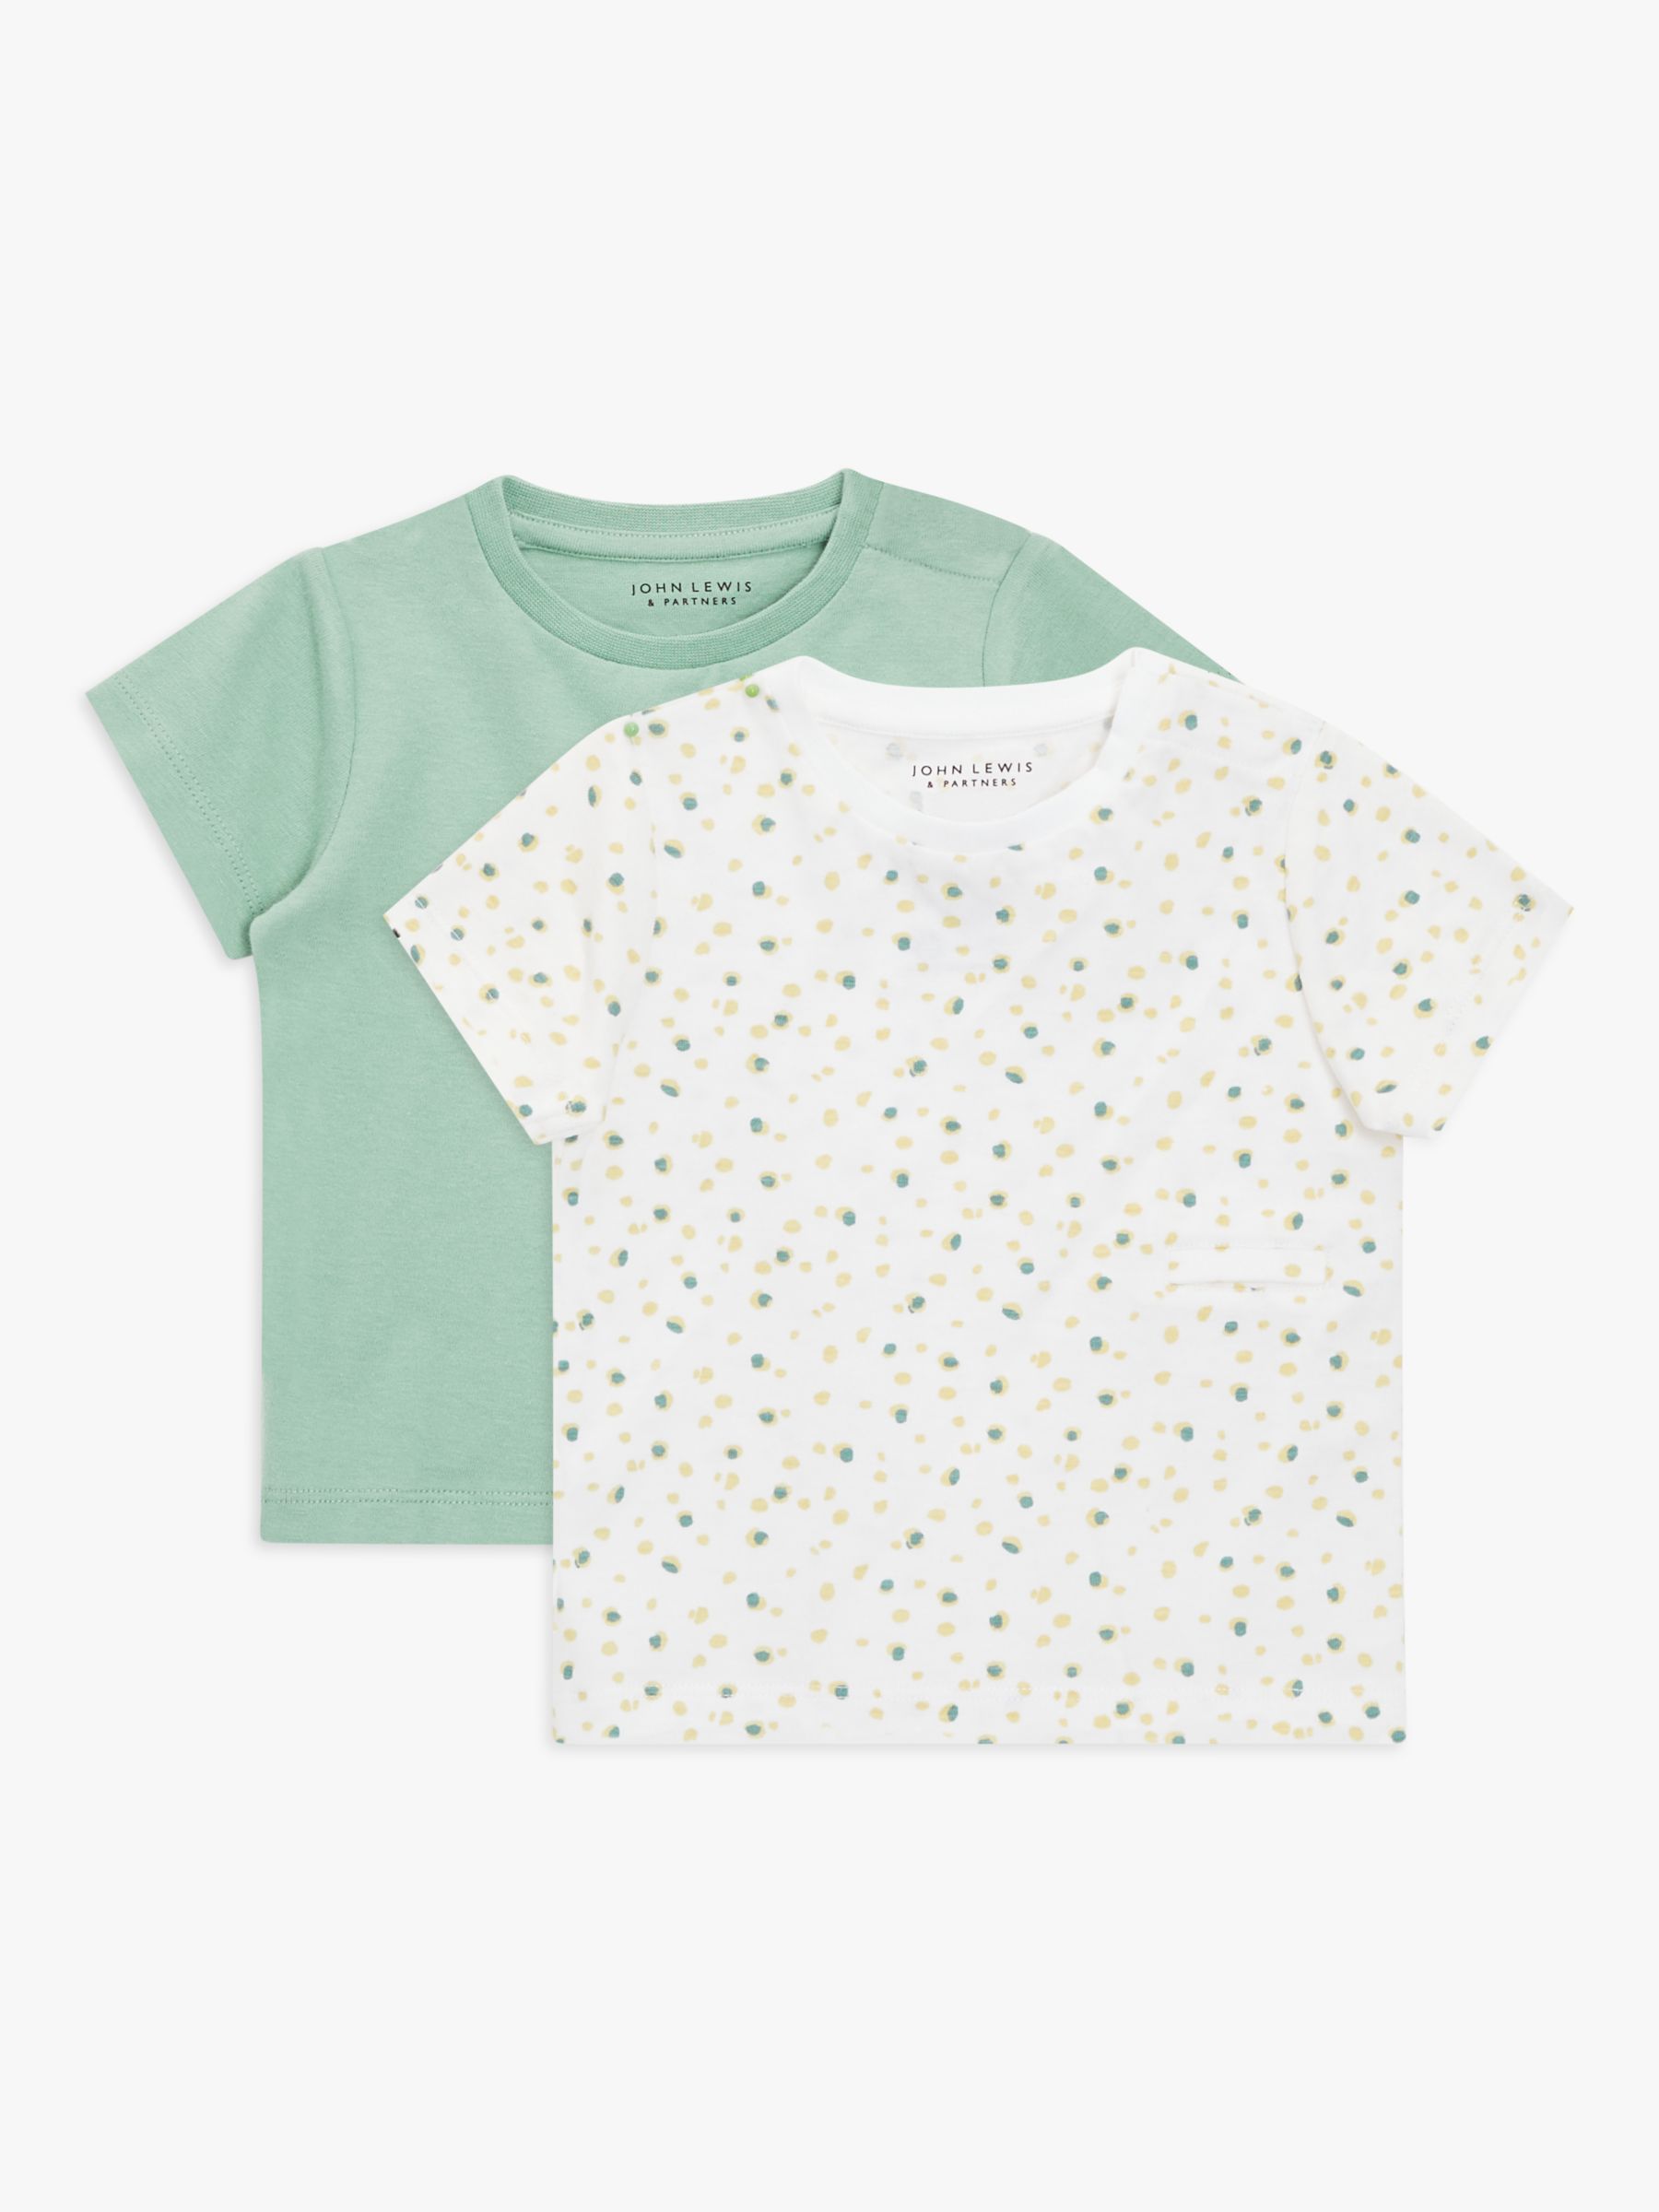 John Lewis Baby GOTS Organic Adaptive T-Shirt, Pack of 2, Multi, 0-3 months